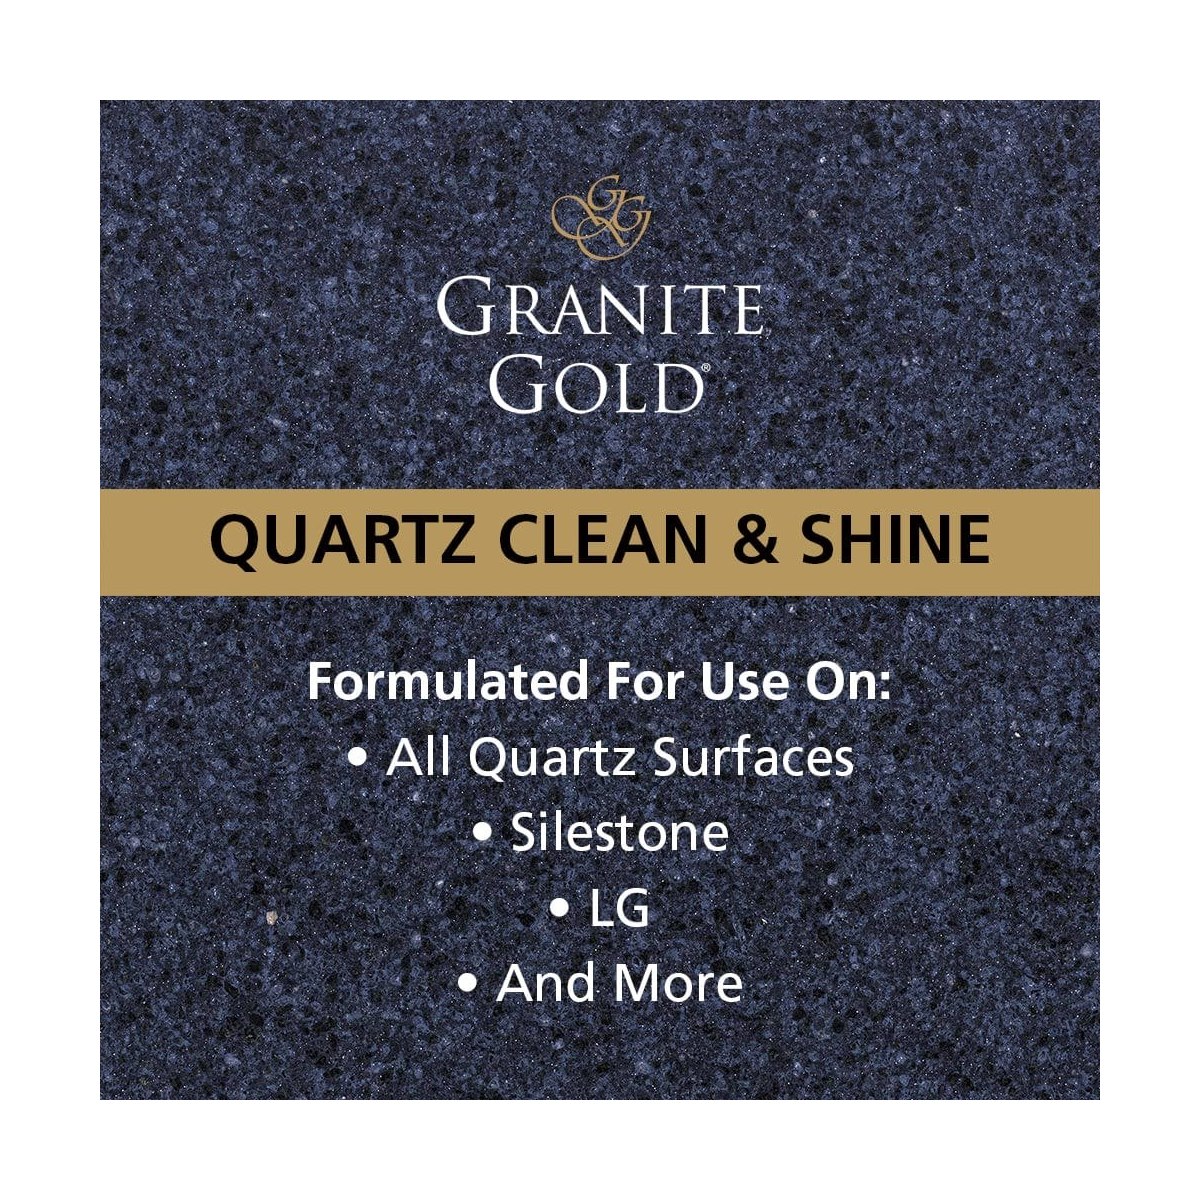 Granite Gold Quartz Clean and Shine